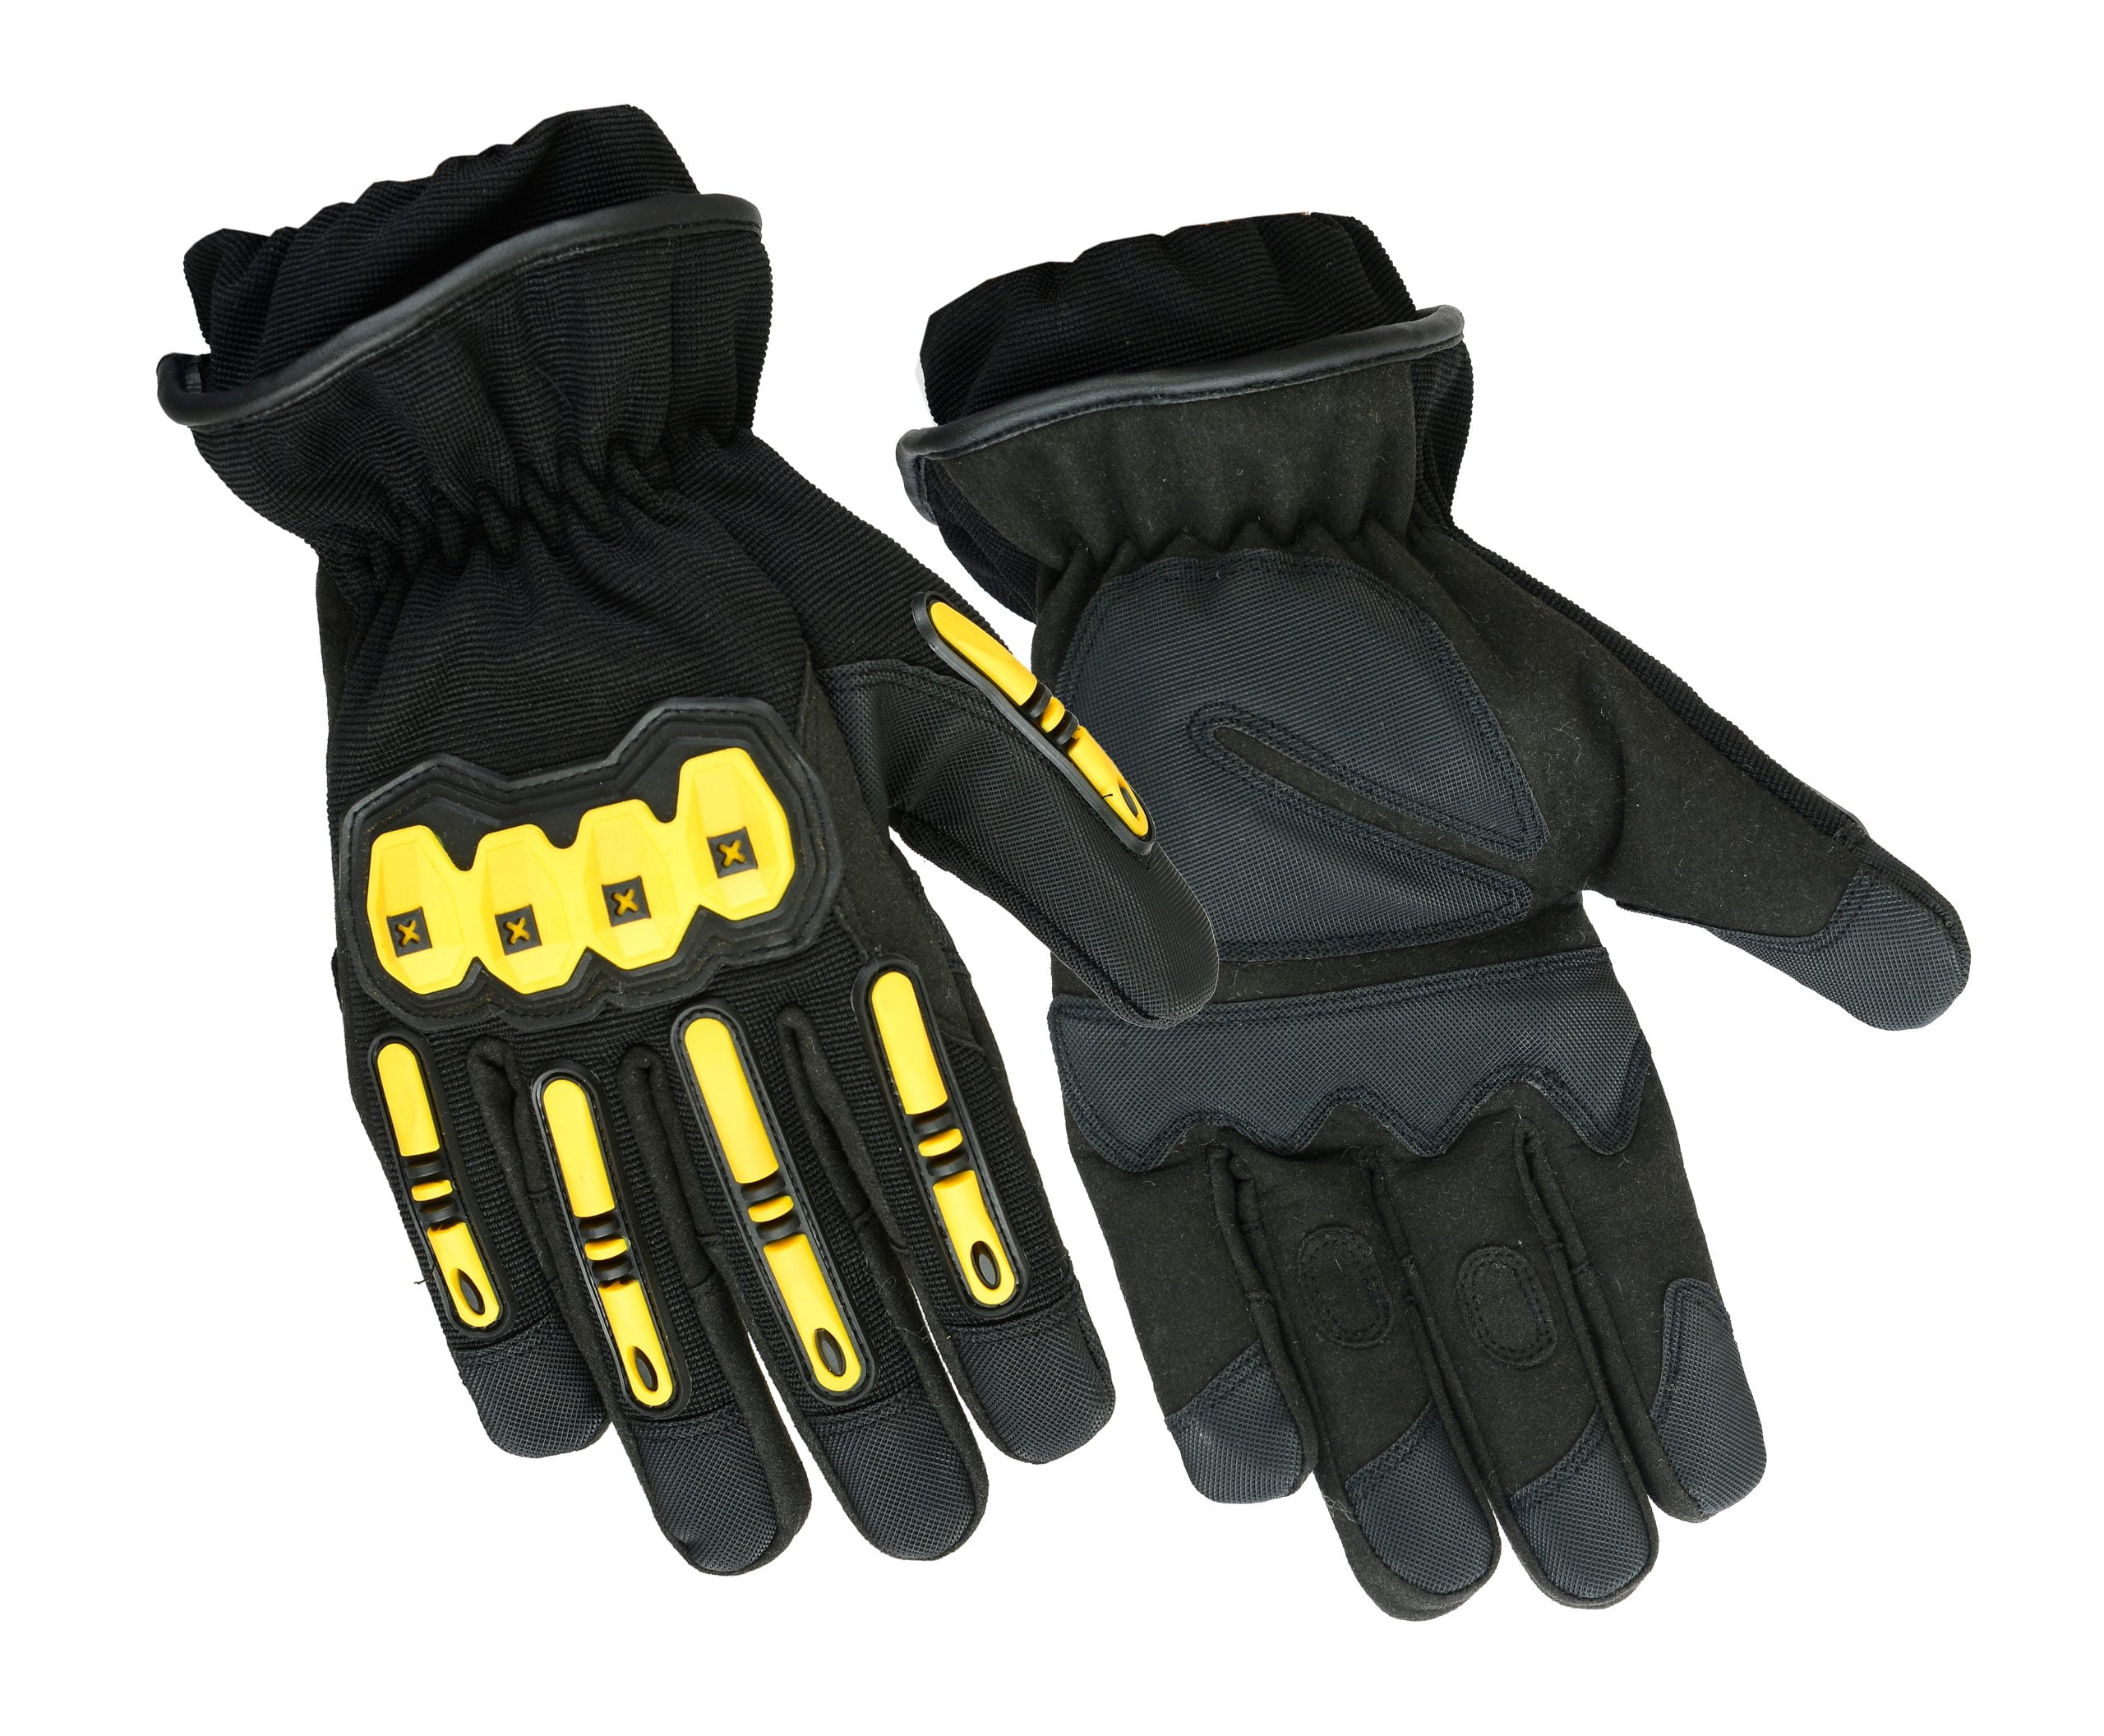 Hard Knuckle Fire Gloves